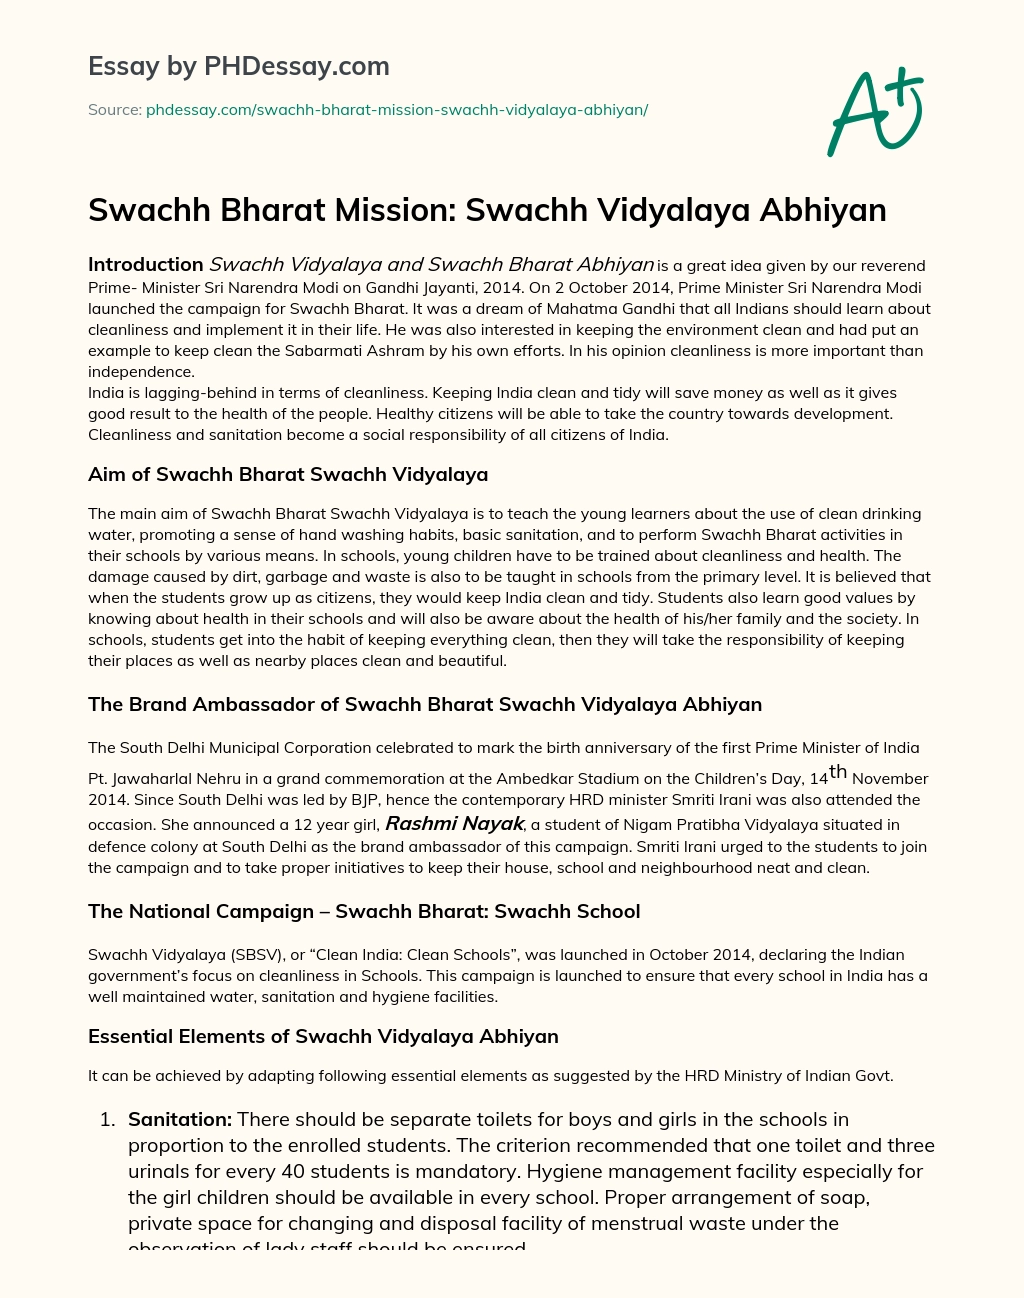 Swachh Bharat Mission: Swachh Vidyalaya Abhiyan essay